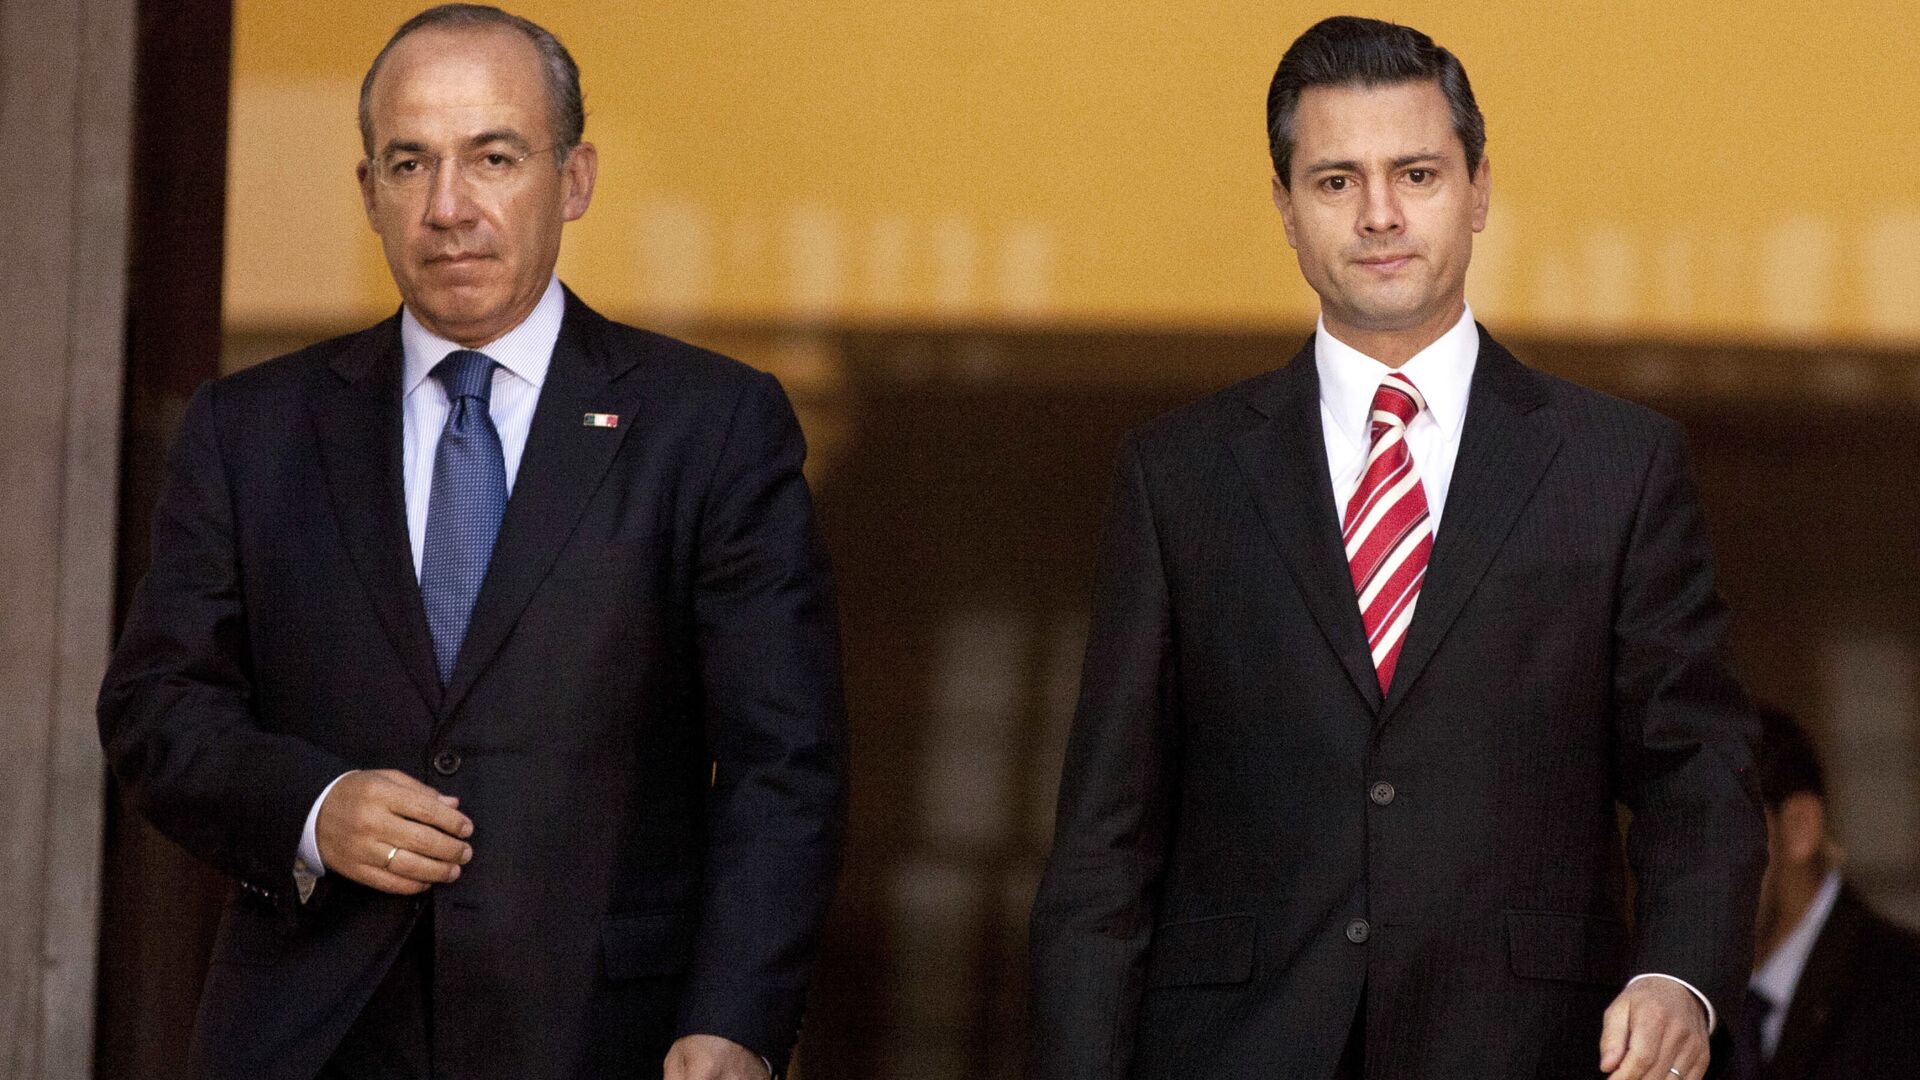 Felipe Calderón Hinojosa y Enrique Peña Nieto, expresidentes de México - Sputnik Mundo, 1920, 27.08.2021